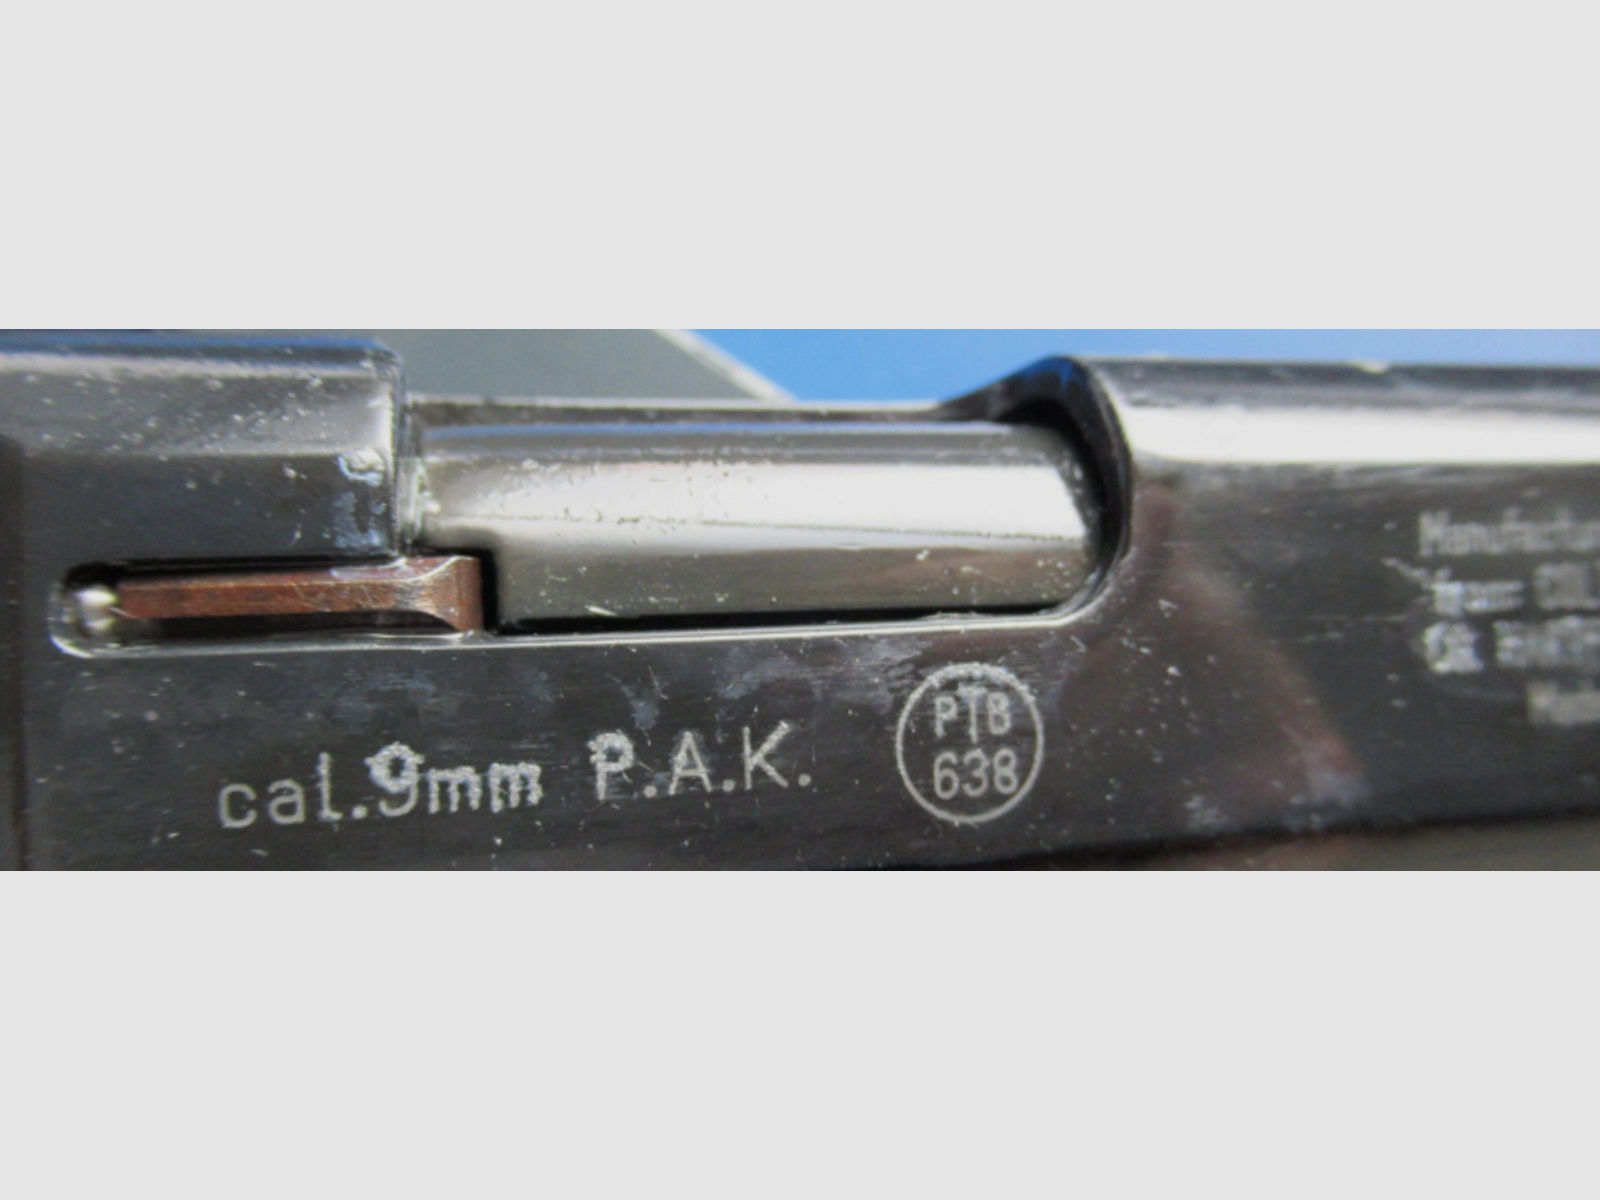 Colt Government 1911 A1 P.A.K 9 mm PTB 638